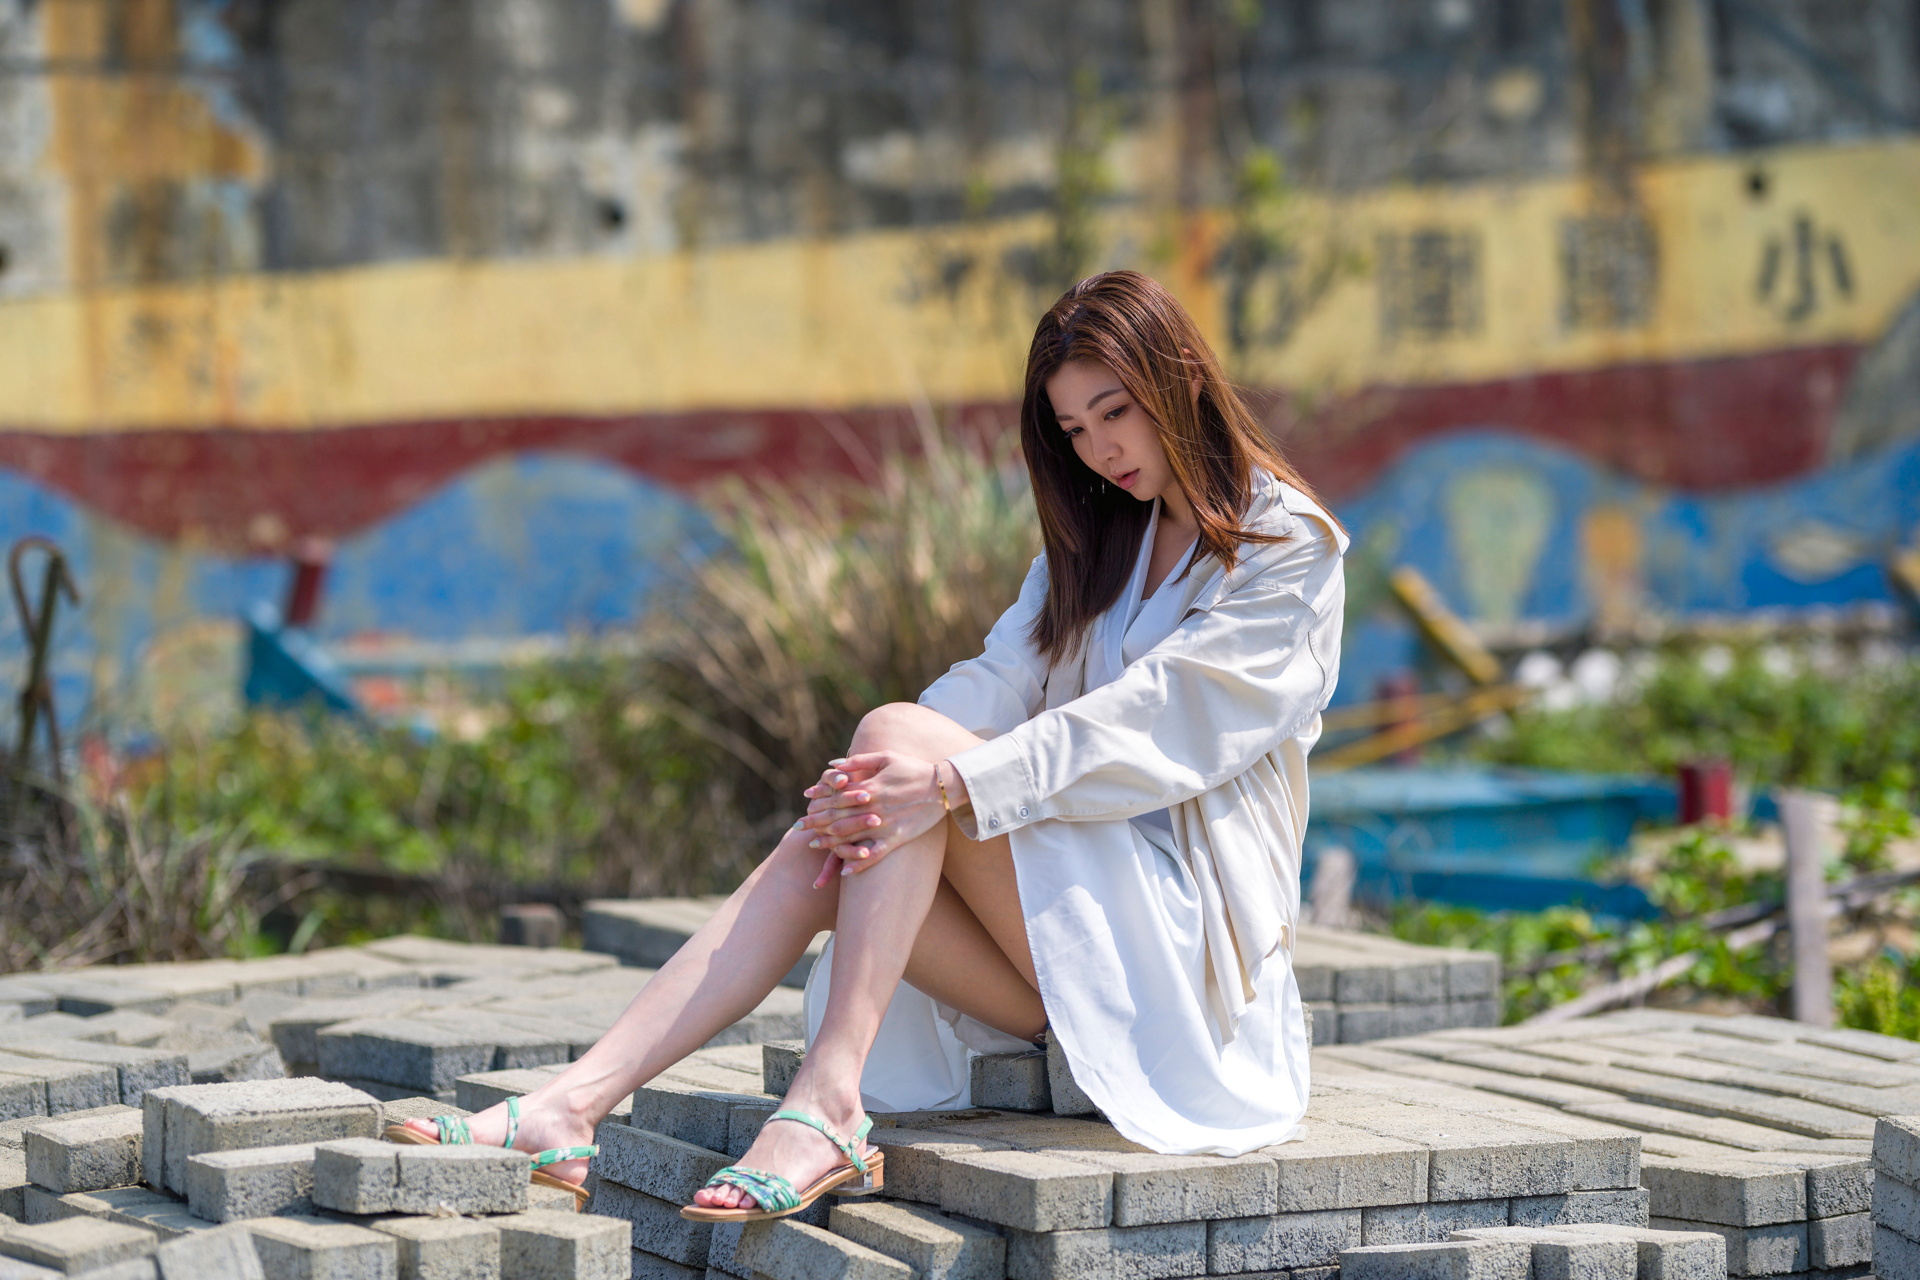 Asian Model Women Long Hair Dark Hair Sitting Barefoot Sandal Bricks Outdoors Plants 1920x1280